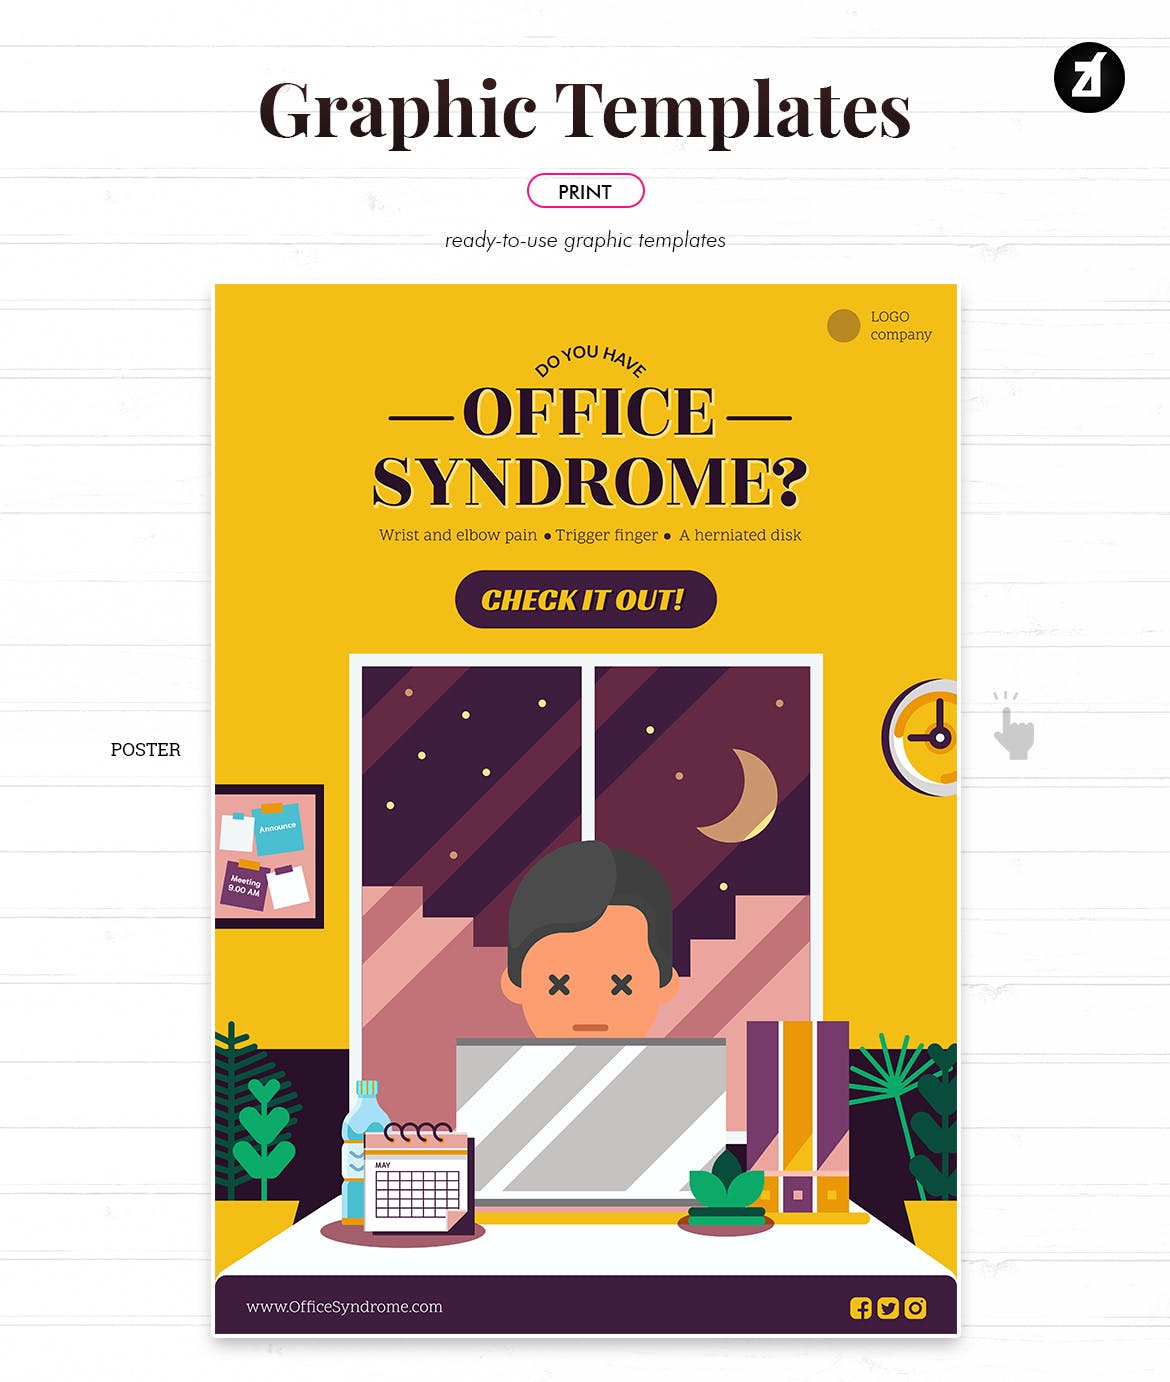 办公室综合症主题矢量插画素材 Office syndrome graphic templates插图(1)